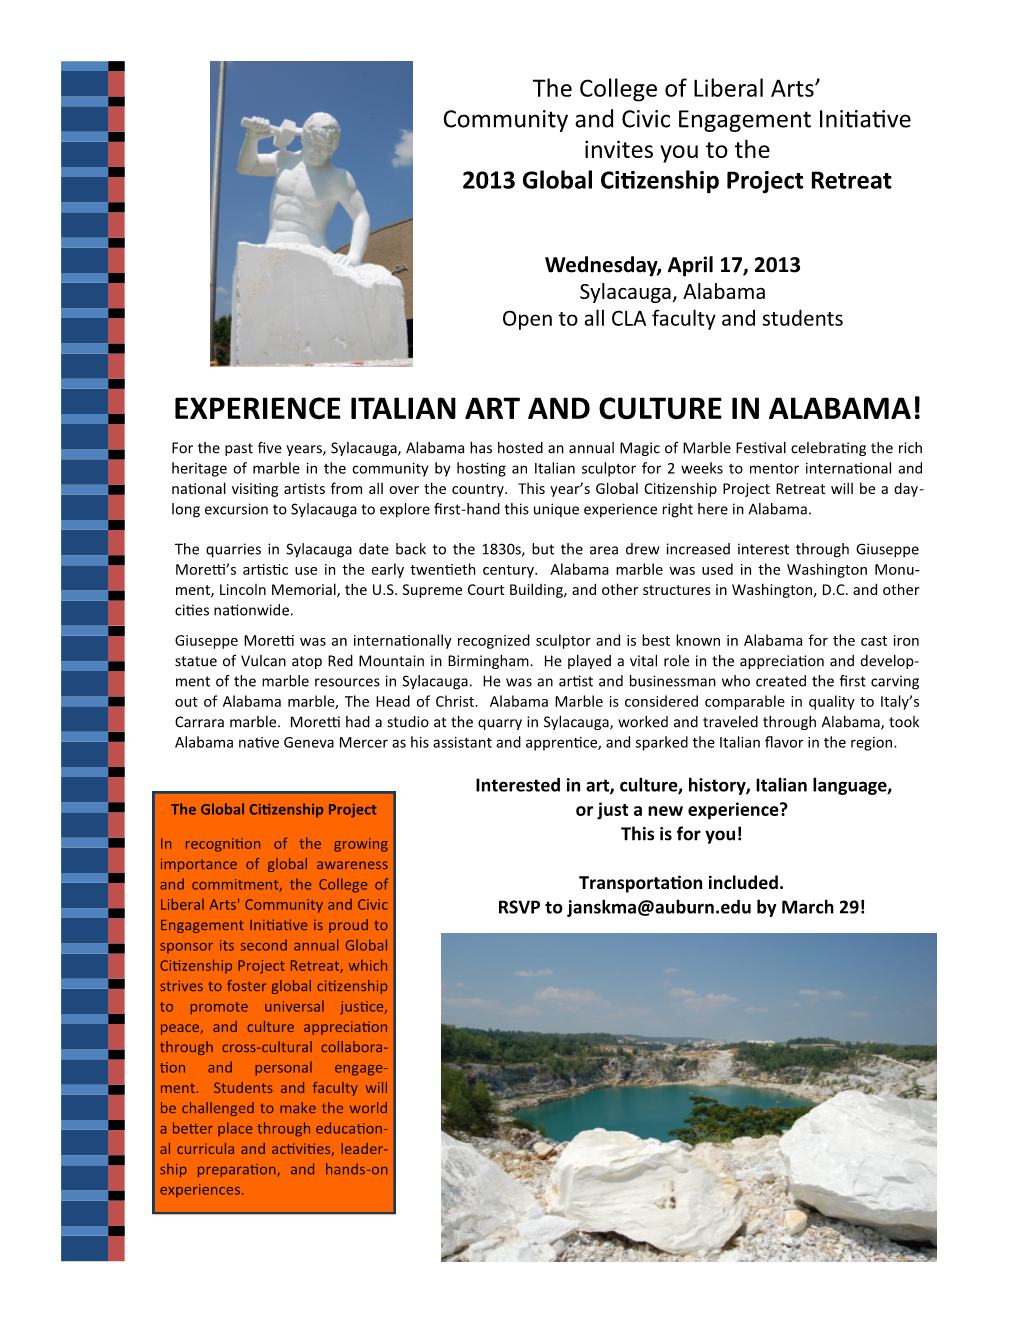 Experience Italian Art and Culture in Alabama!